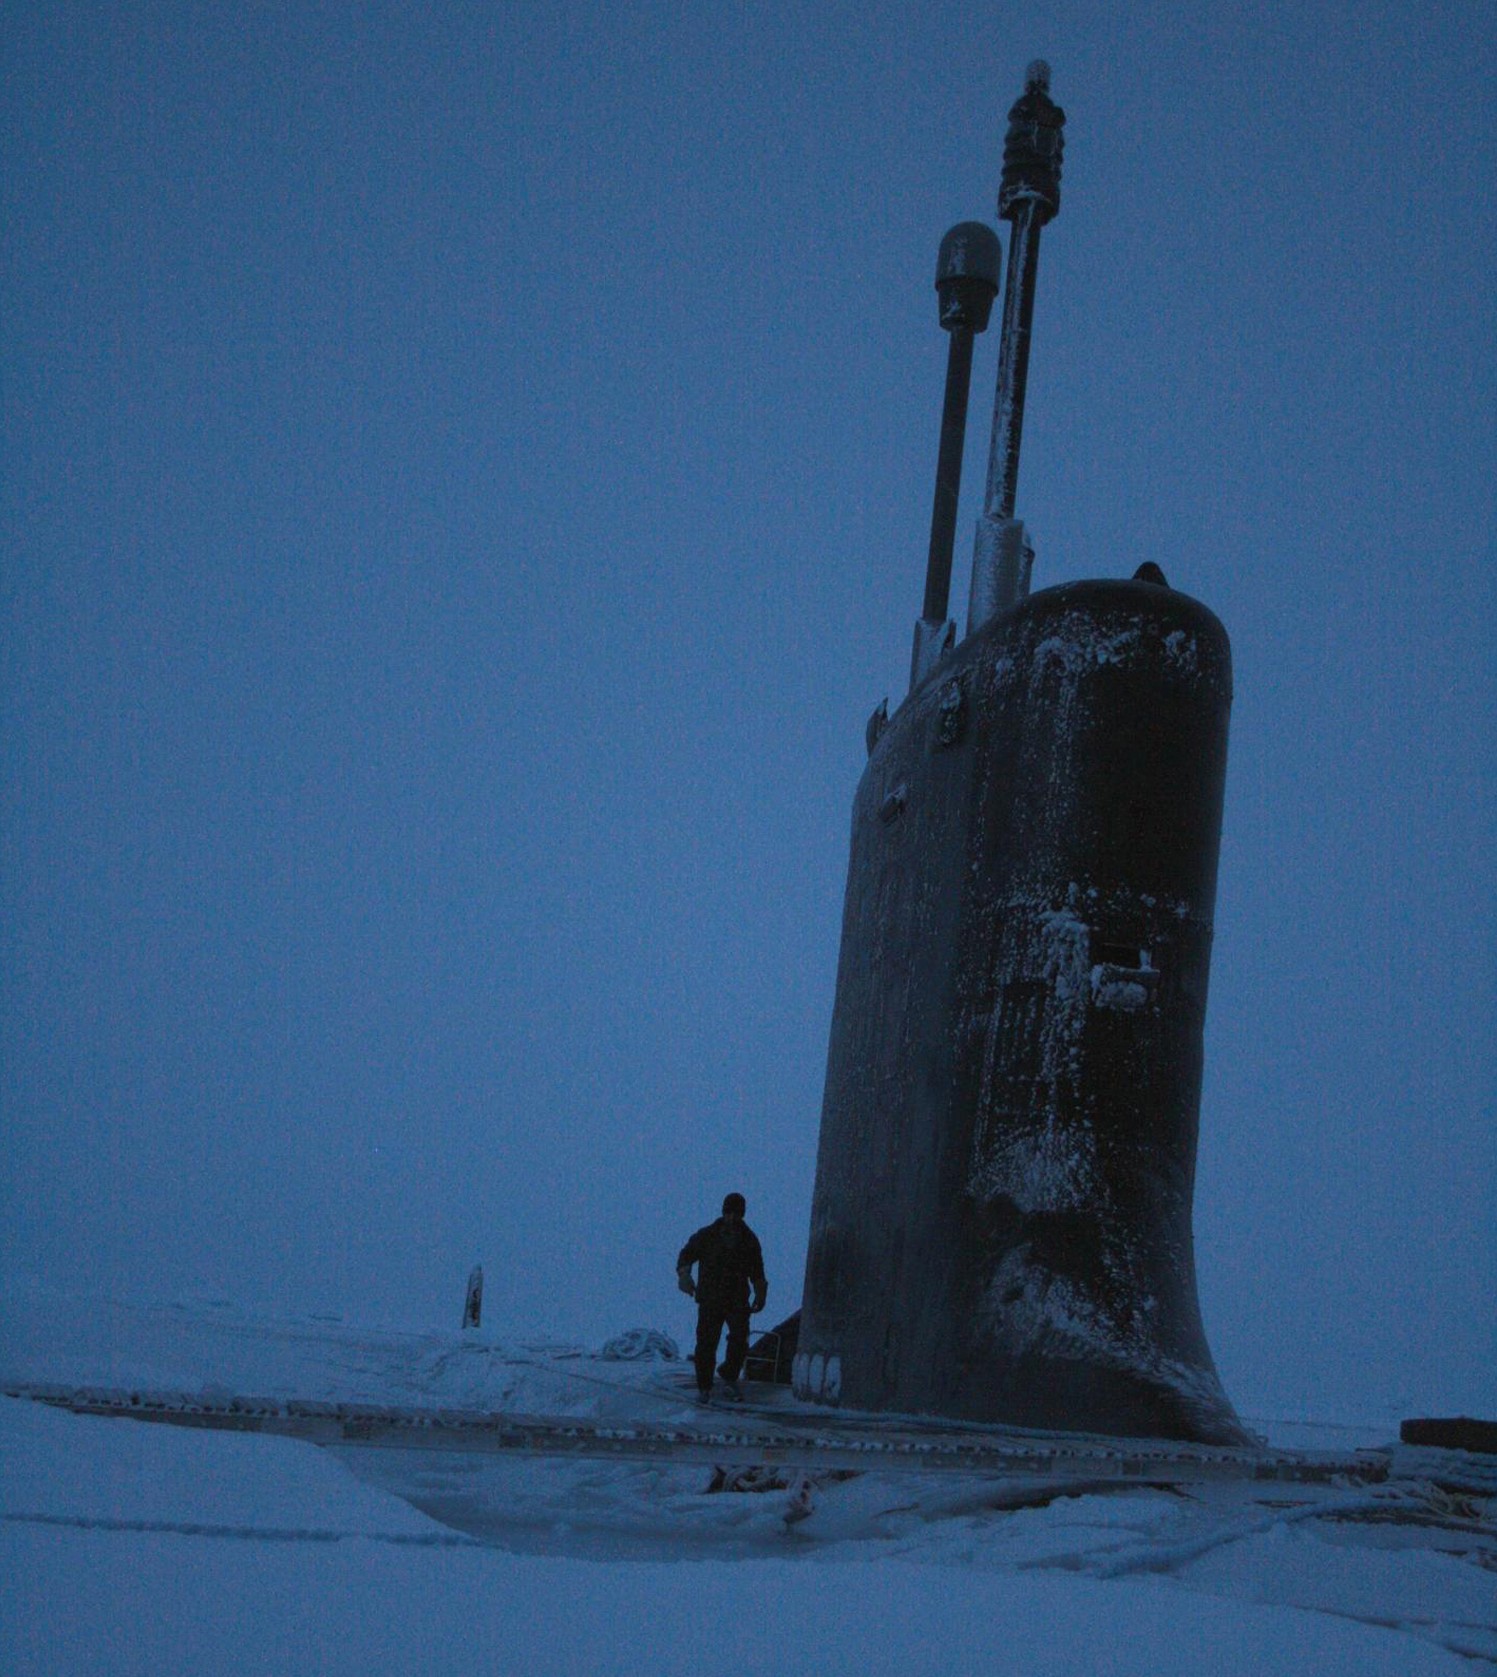 ssn-775 uss texas virginia class attack submarine navy 2009 34 arctic ocean north pole